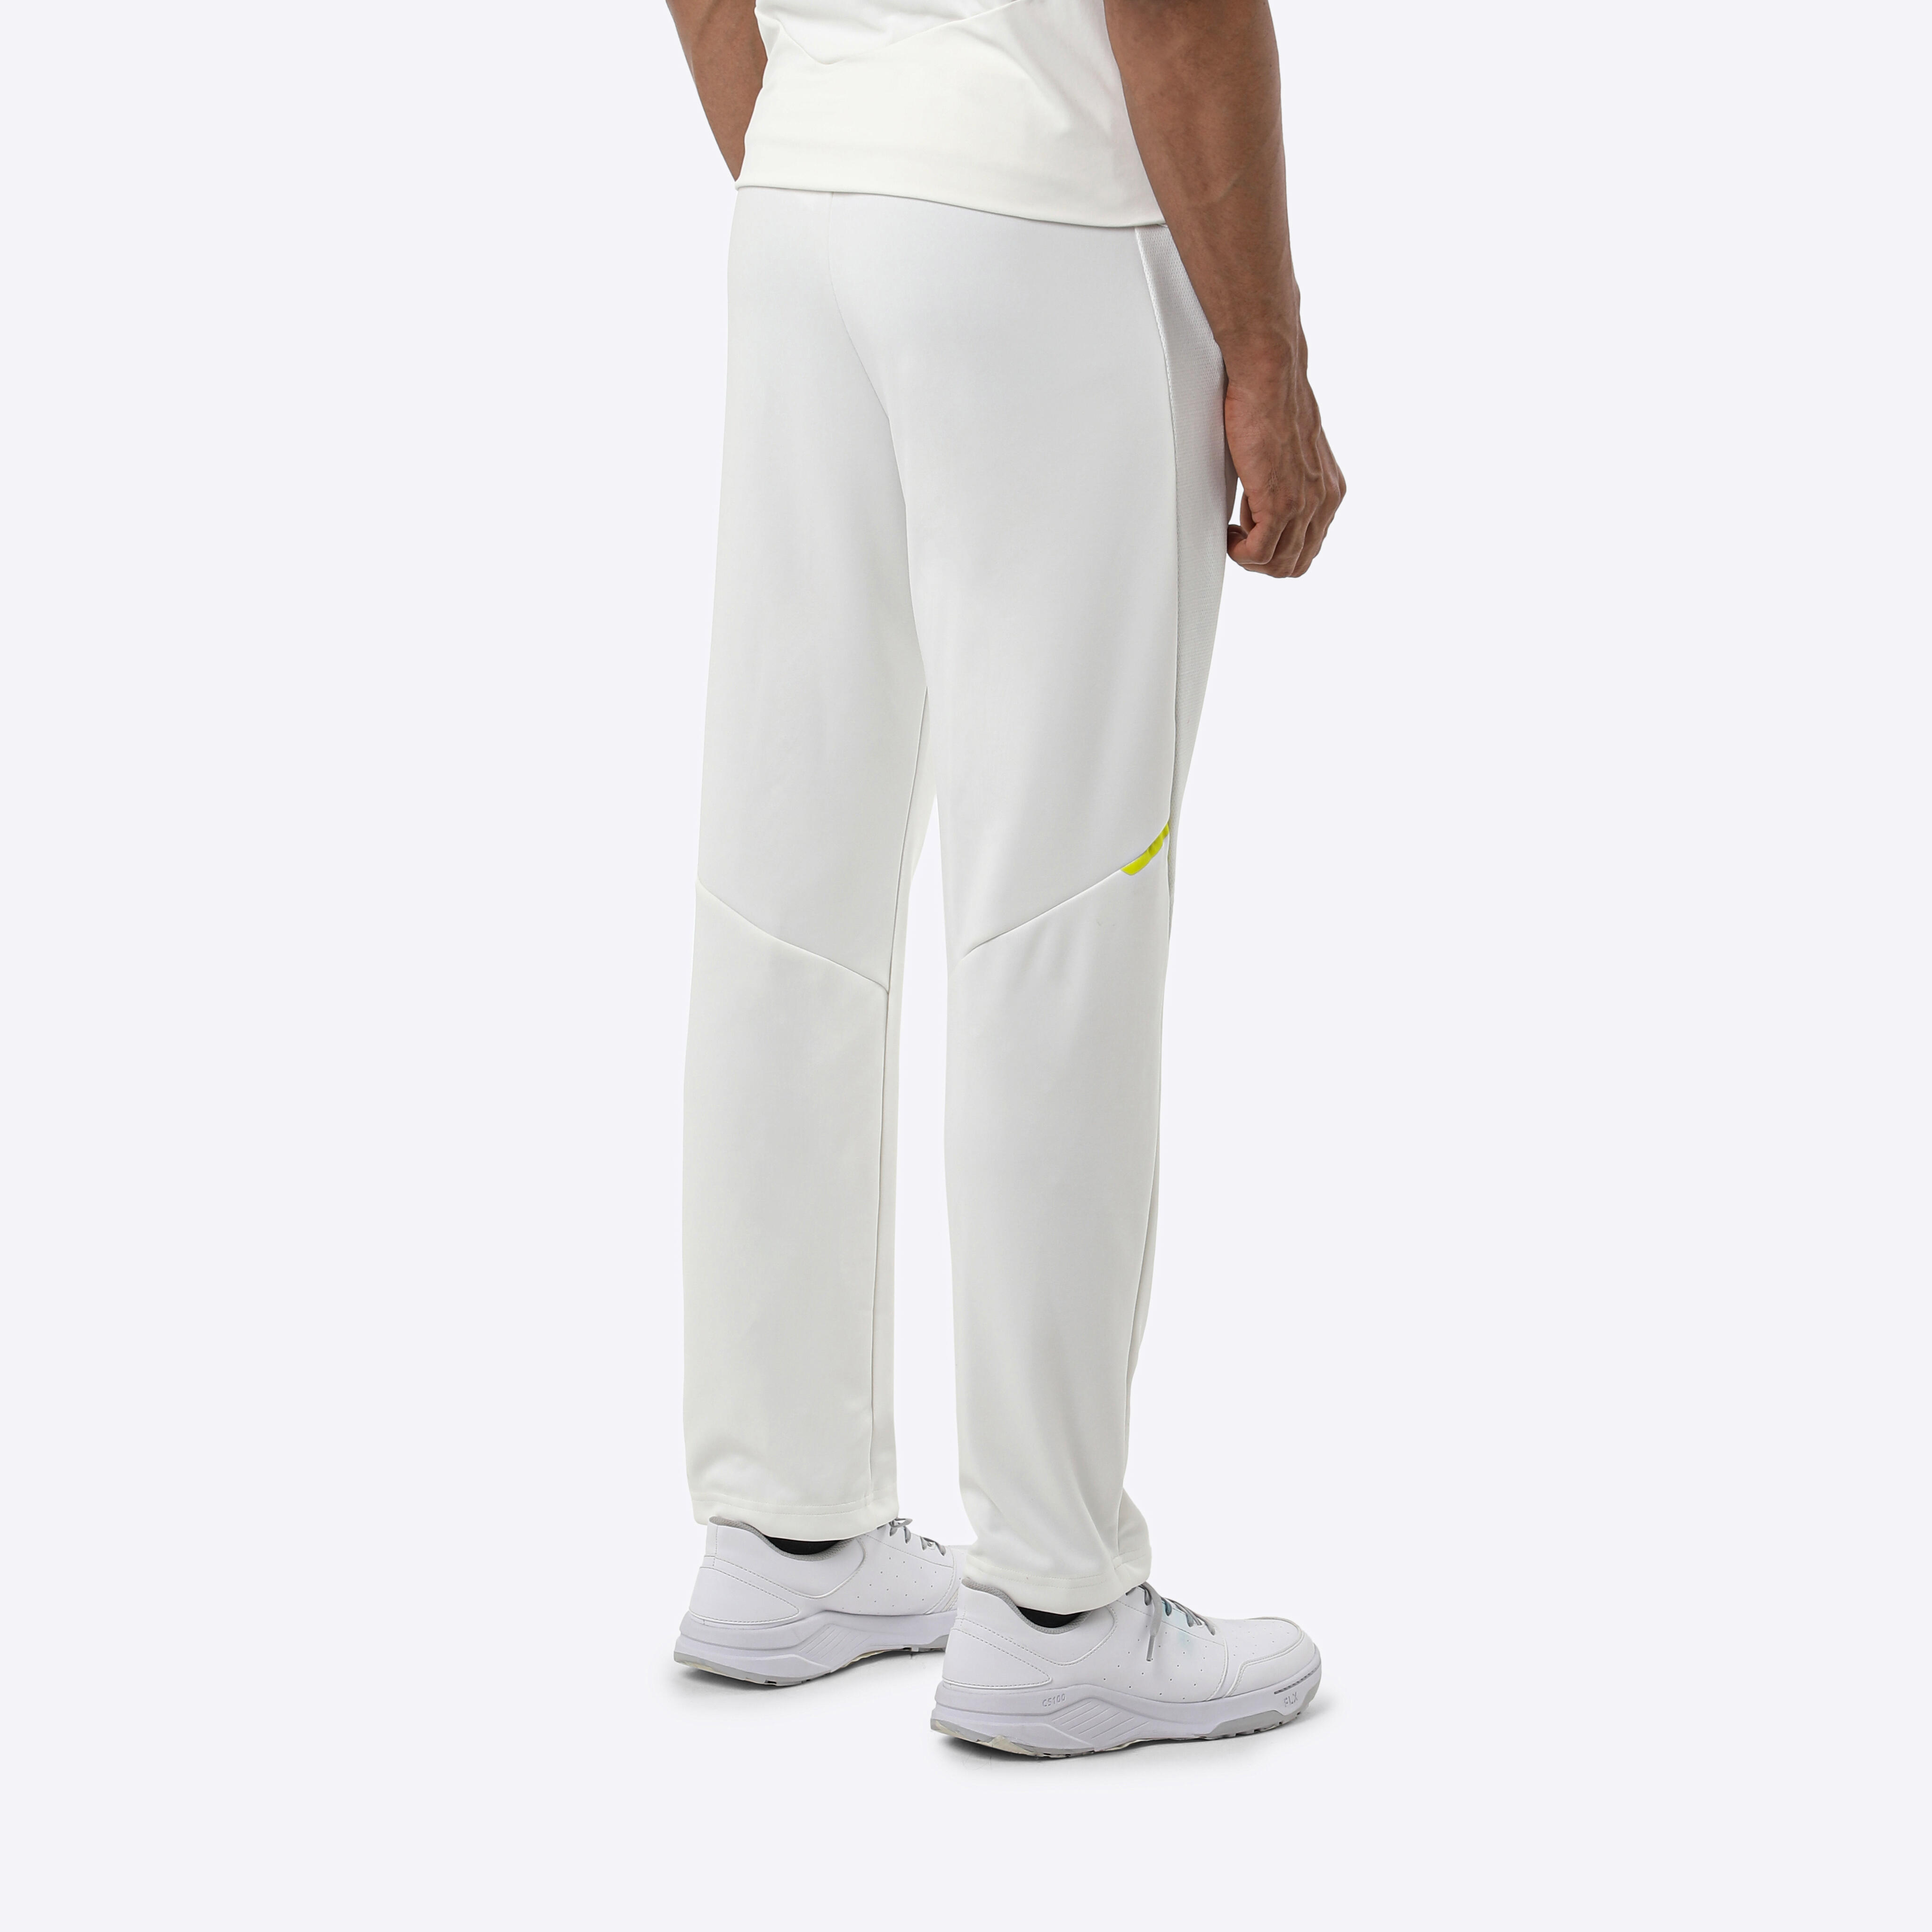 Buy Men's Cricket Jersey Advanced Sun Protection P 900 UV White Online |  Decathlon